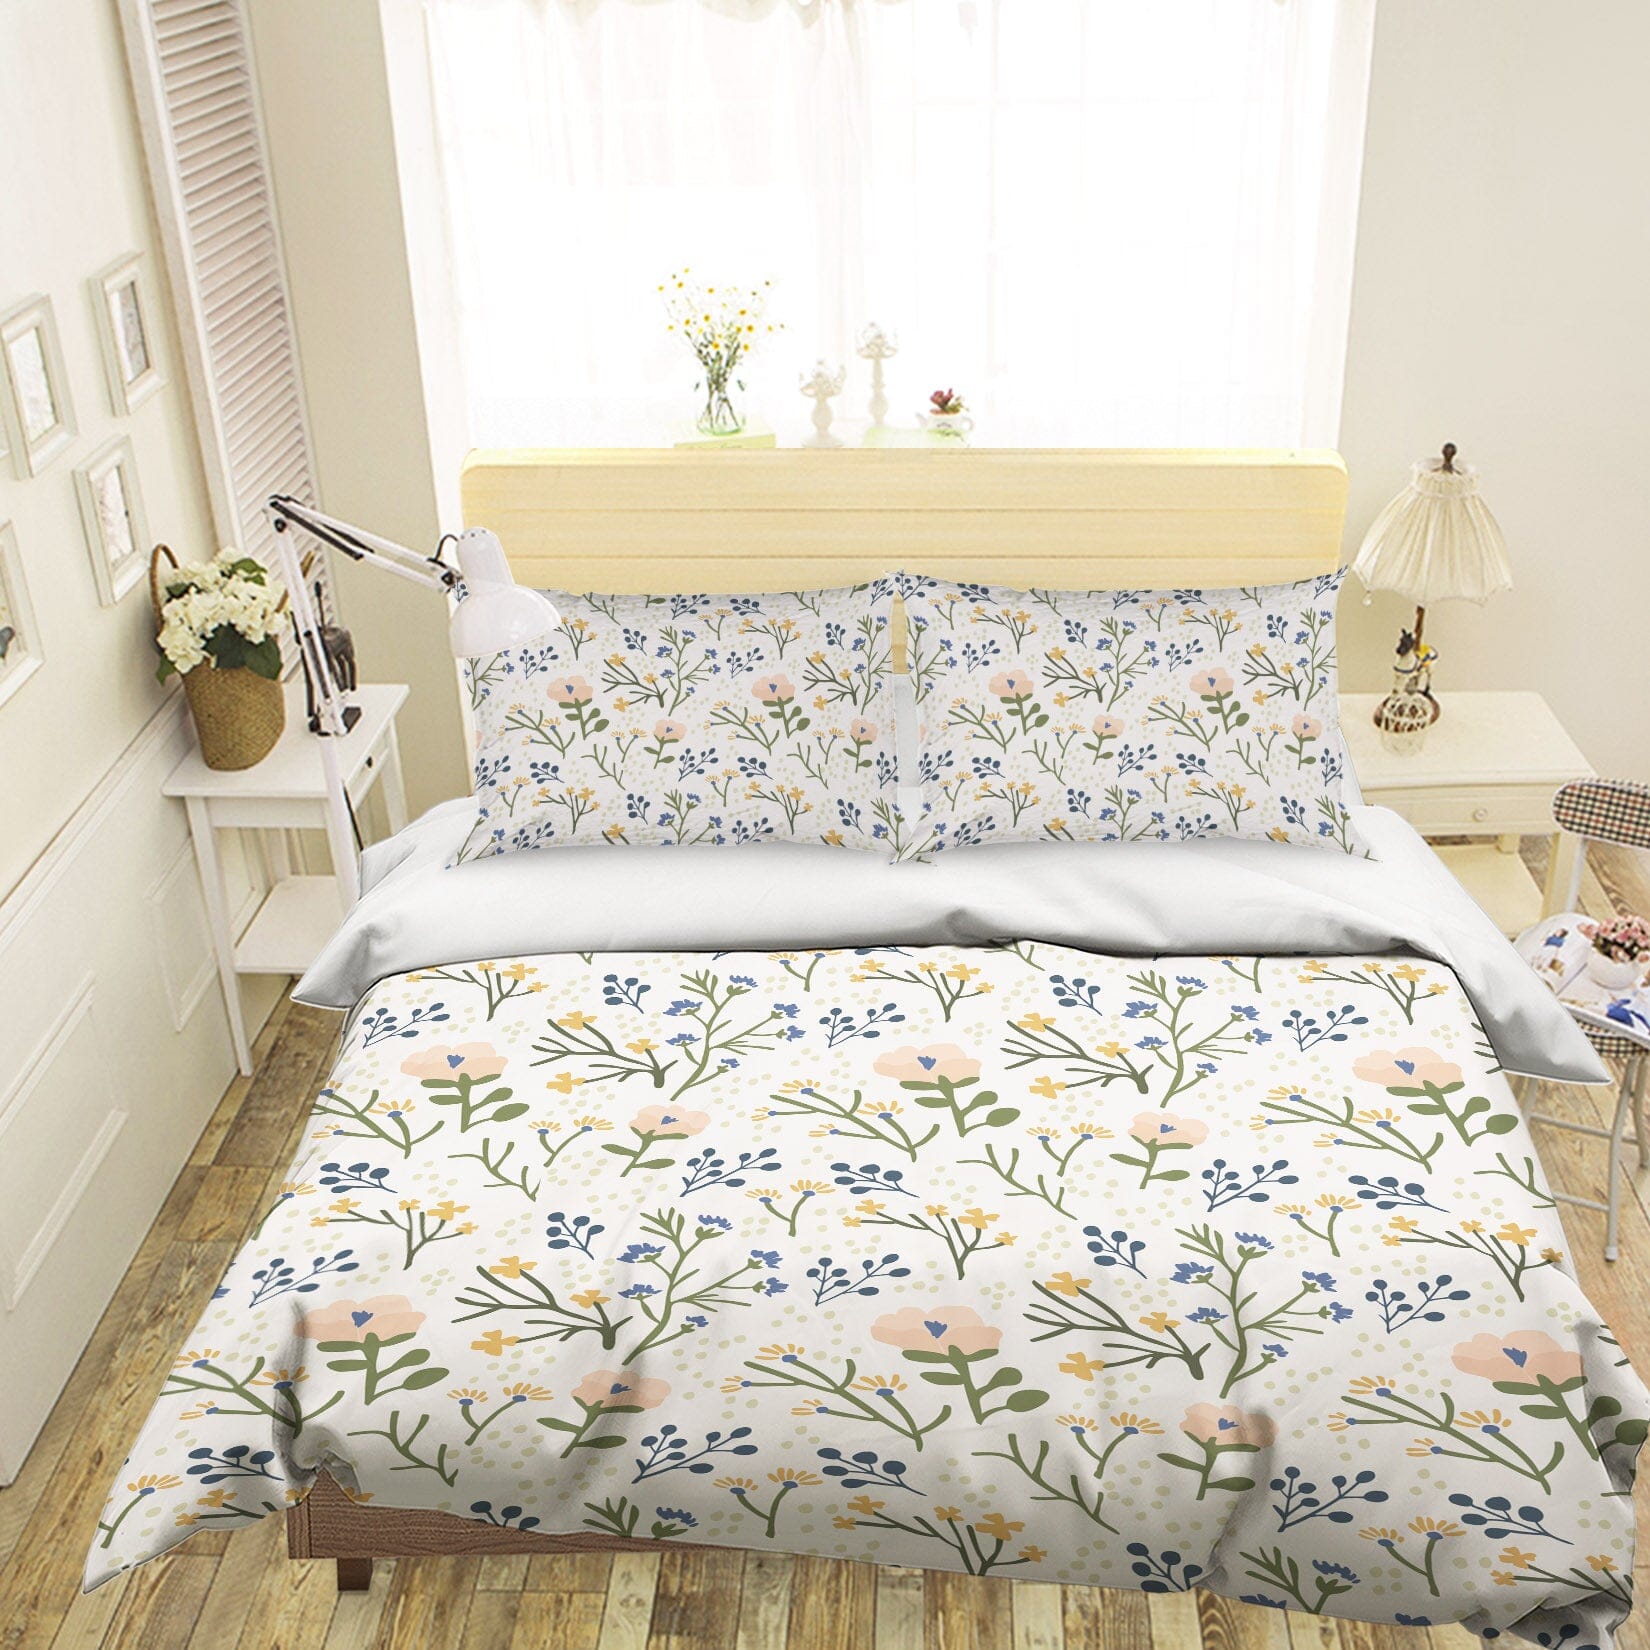 3D Colored Flowers 2109 Jillian Helvey Bedding Bed Pillowcases Quilt Quiet Covers AJ Creativity Home 